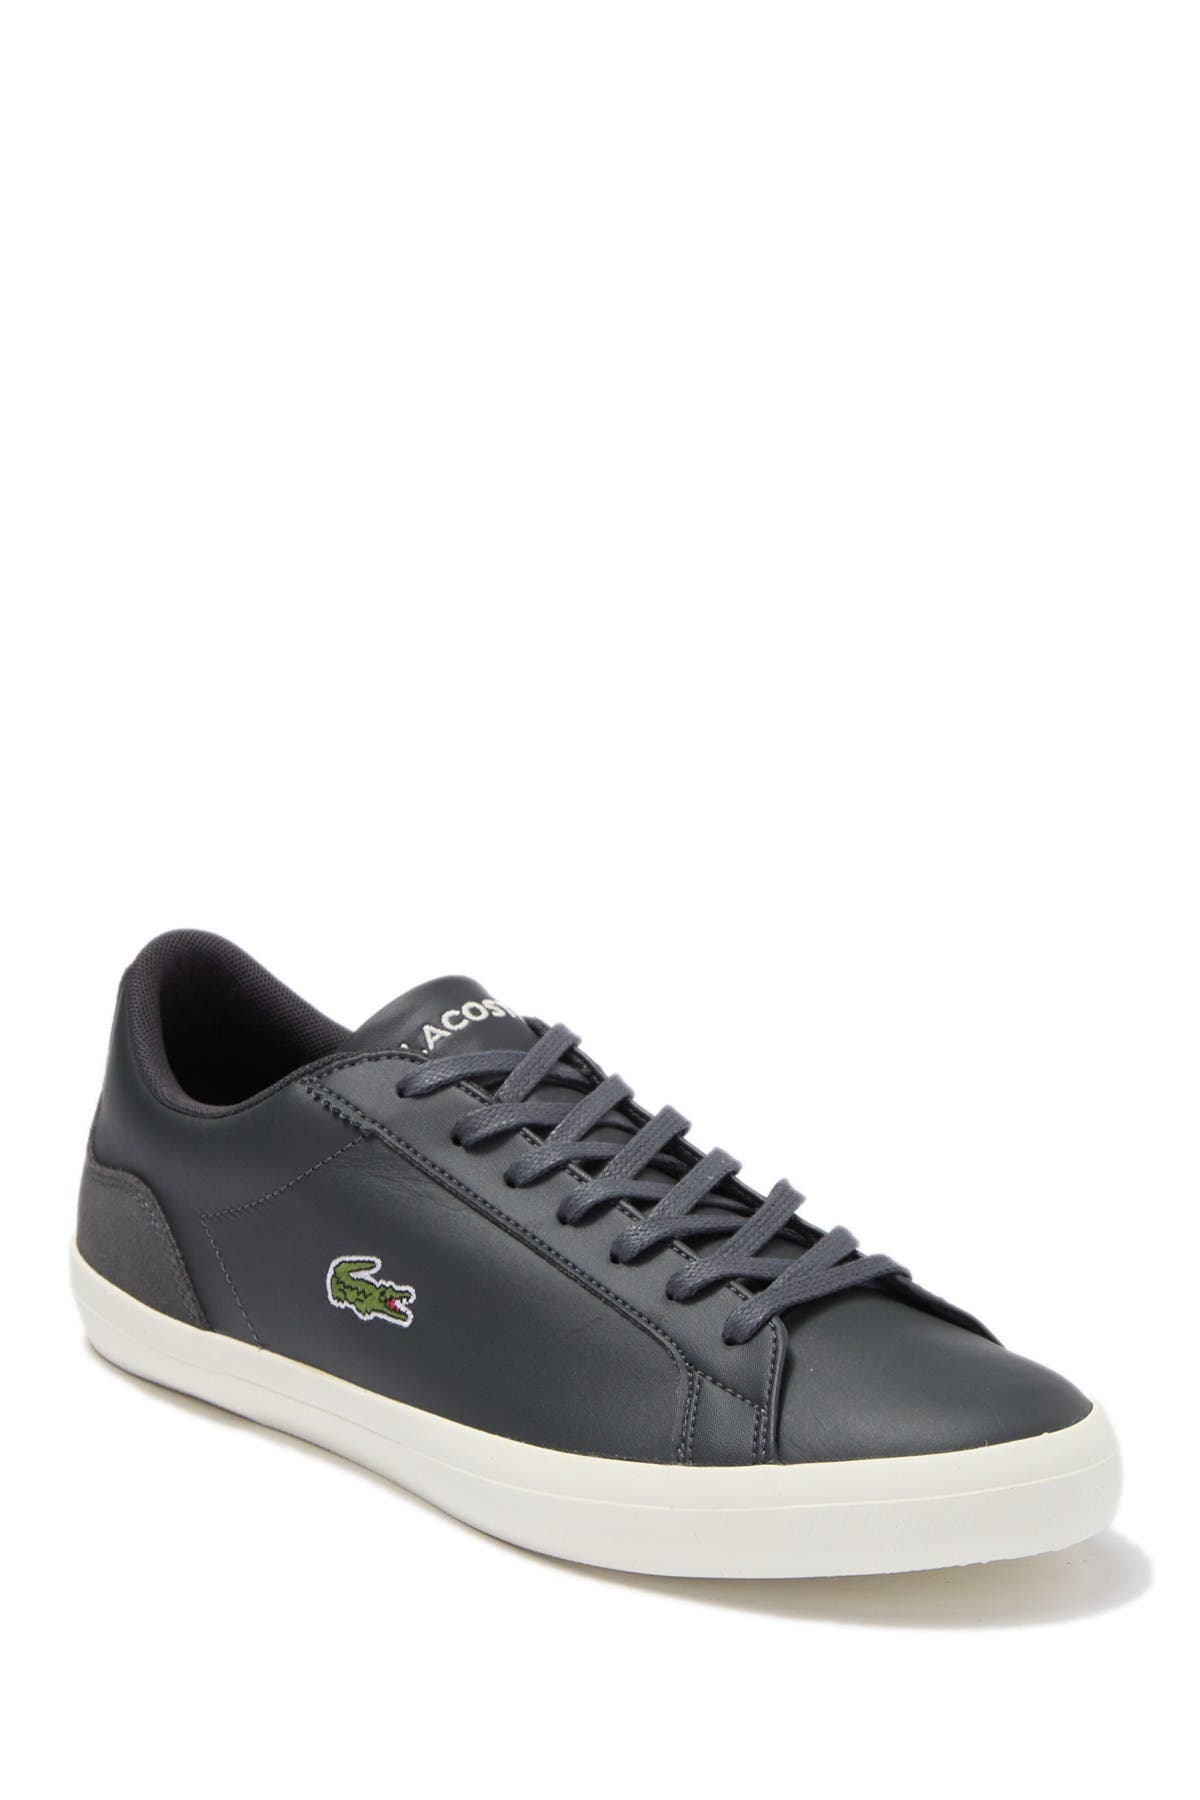 Lacoste | Lerond 319 Leather Sneaker 